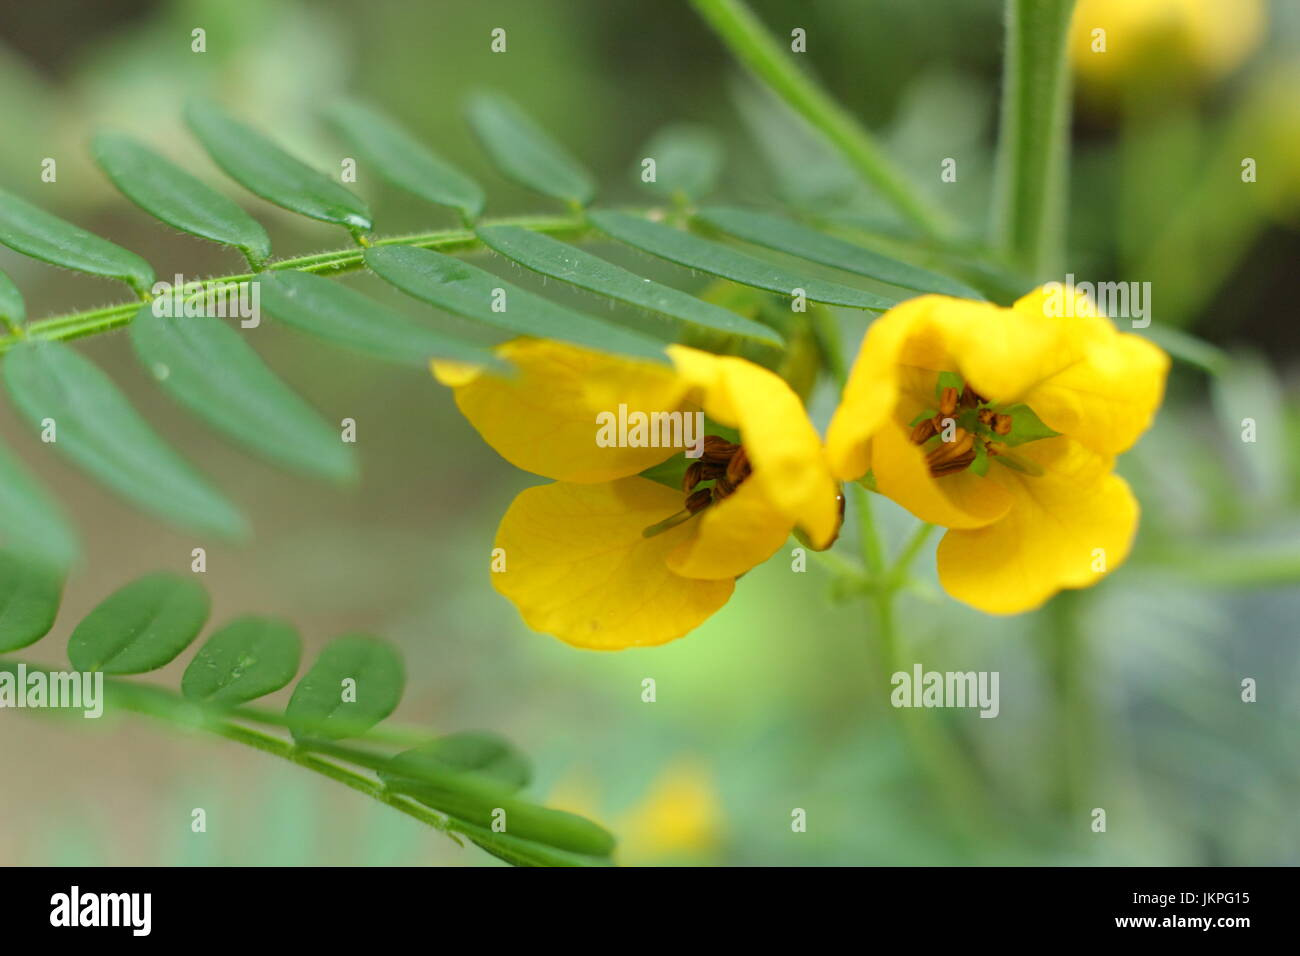 Senna plant (senna caesalpiniaceae) in fulll bloom in a Mediterranean garden Stock Photo